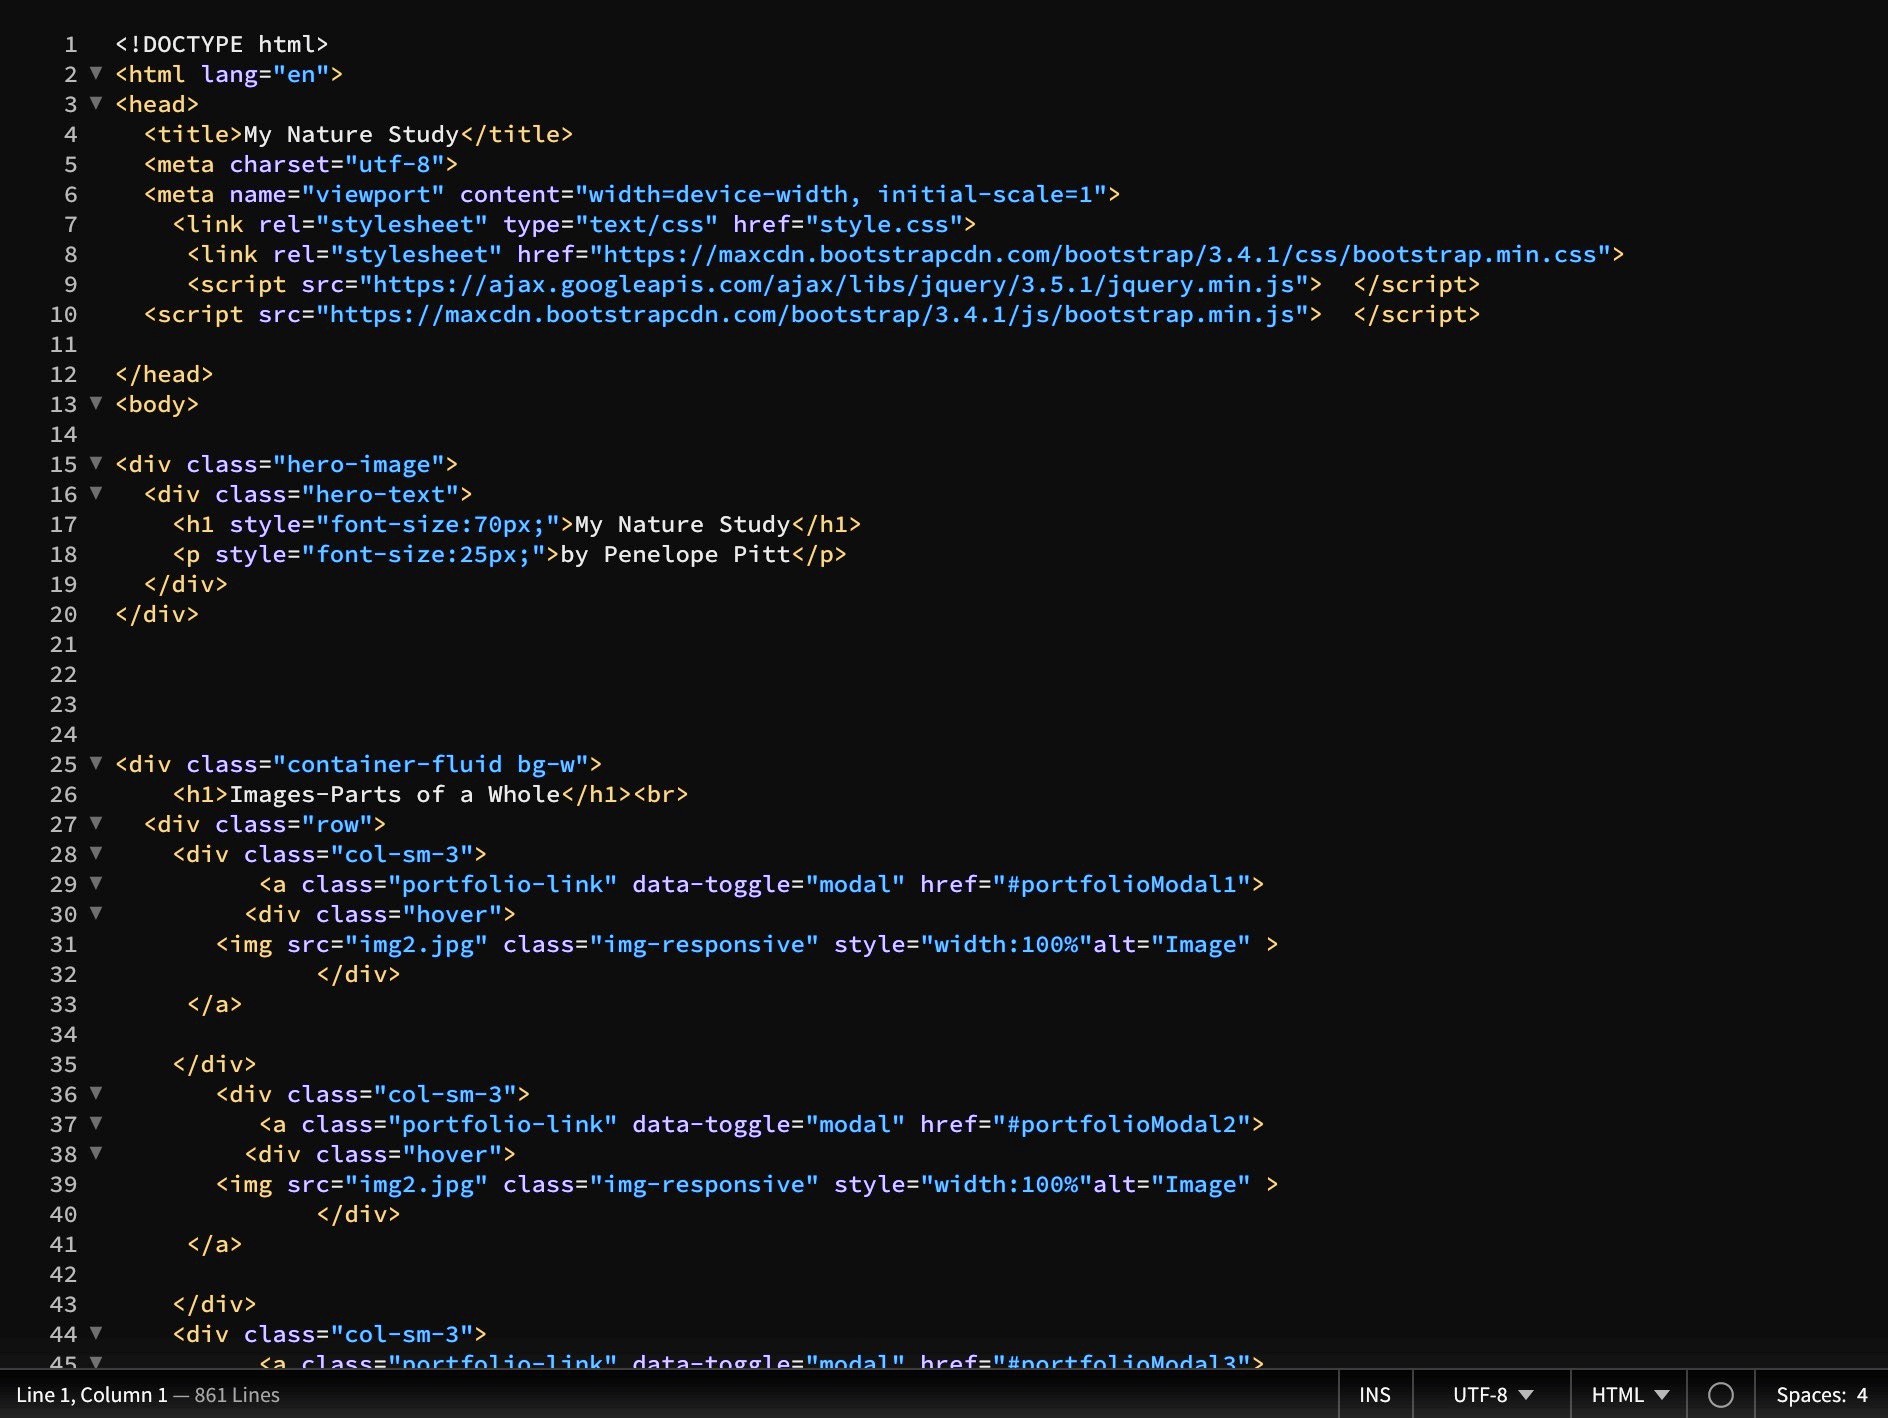 screenshot of HTML code